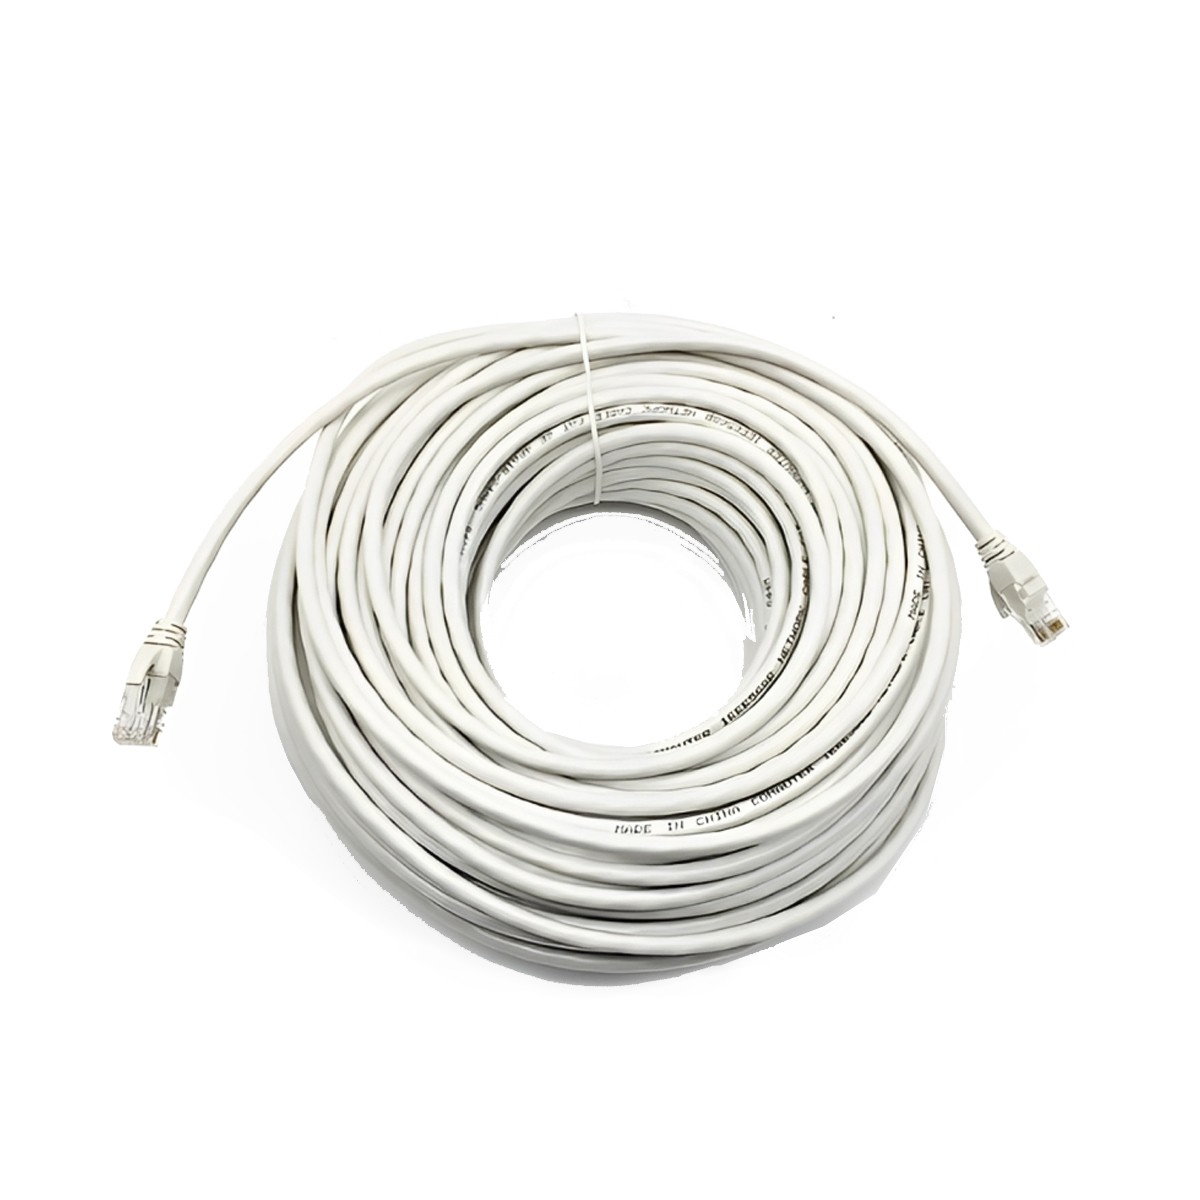 Cables de red Ethernet RJ45 de 20 metros - Cables y accesorios RJ45